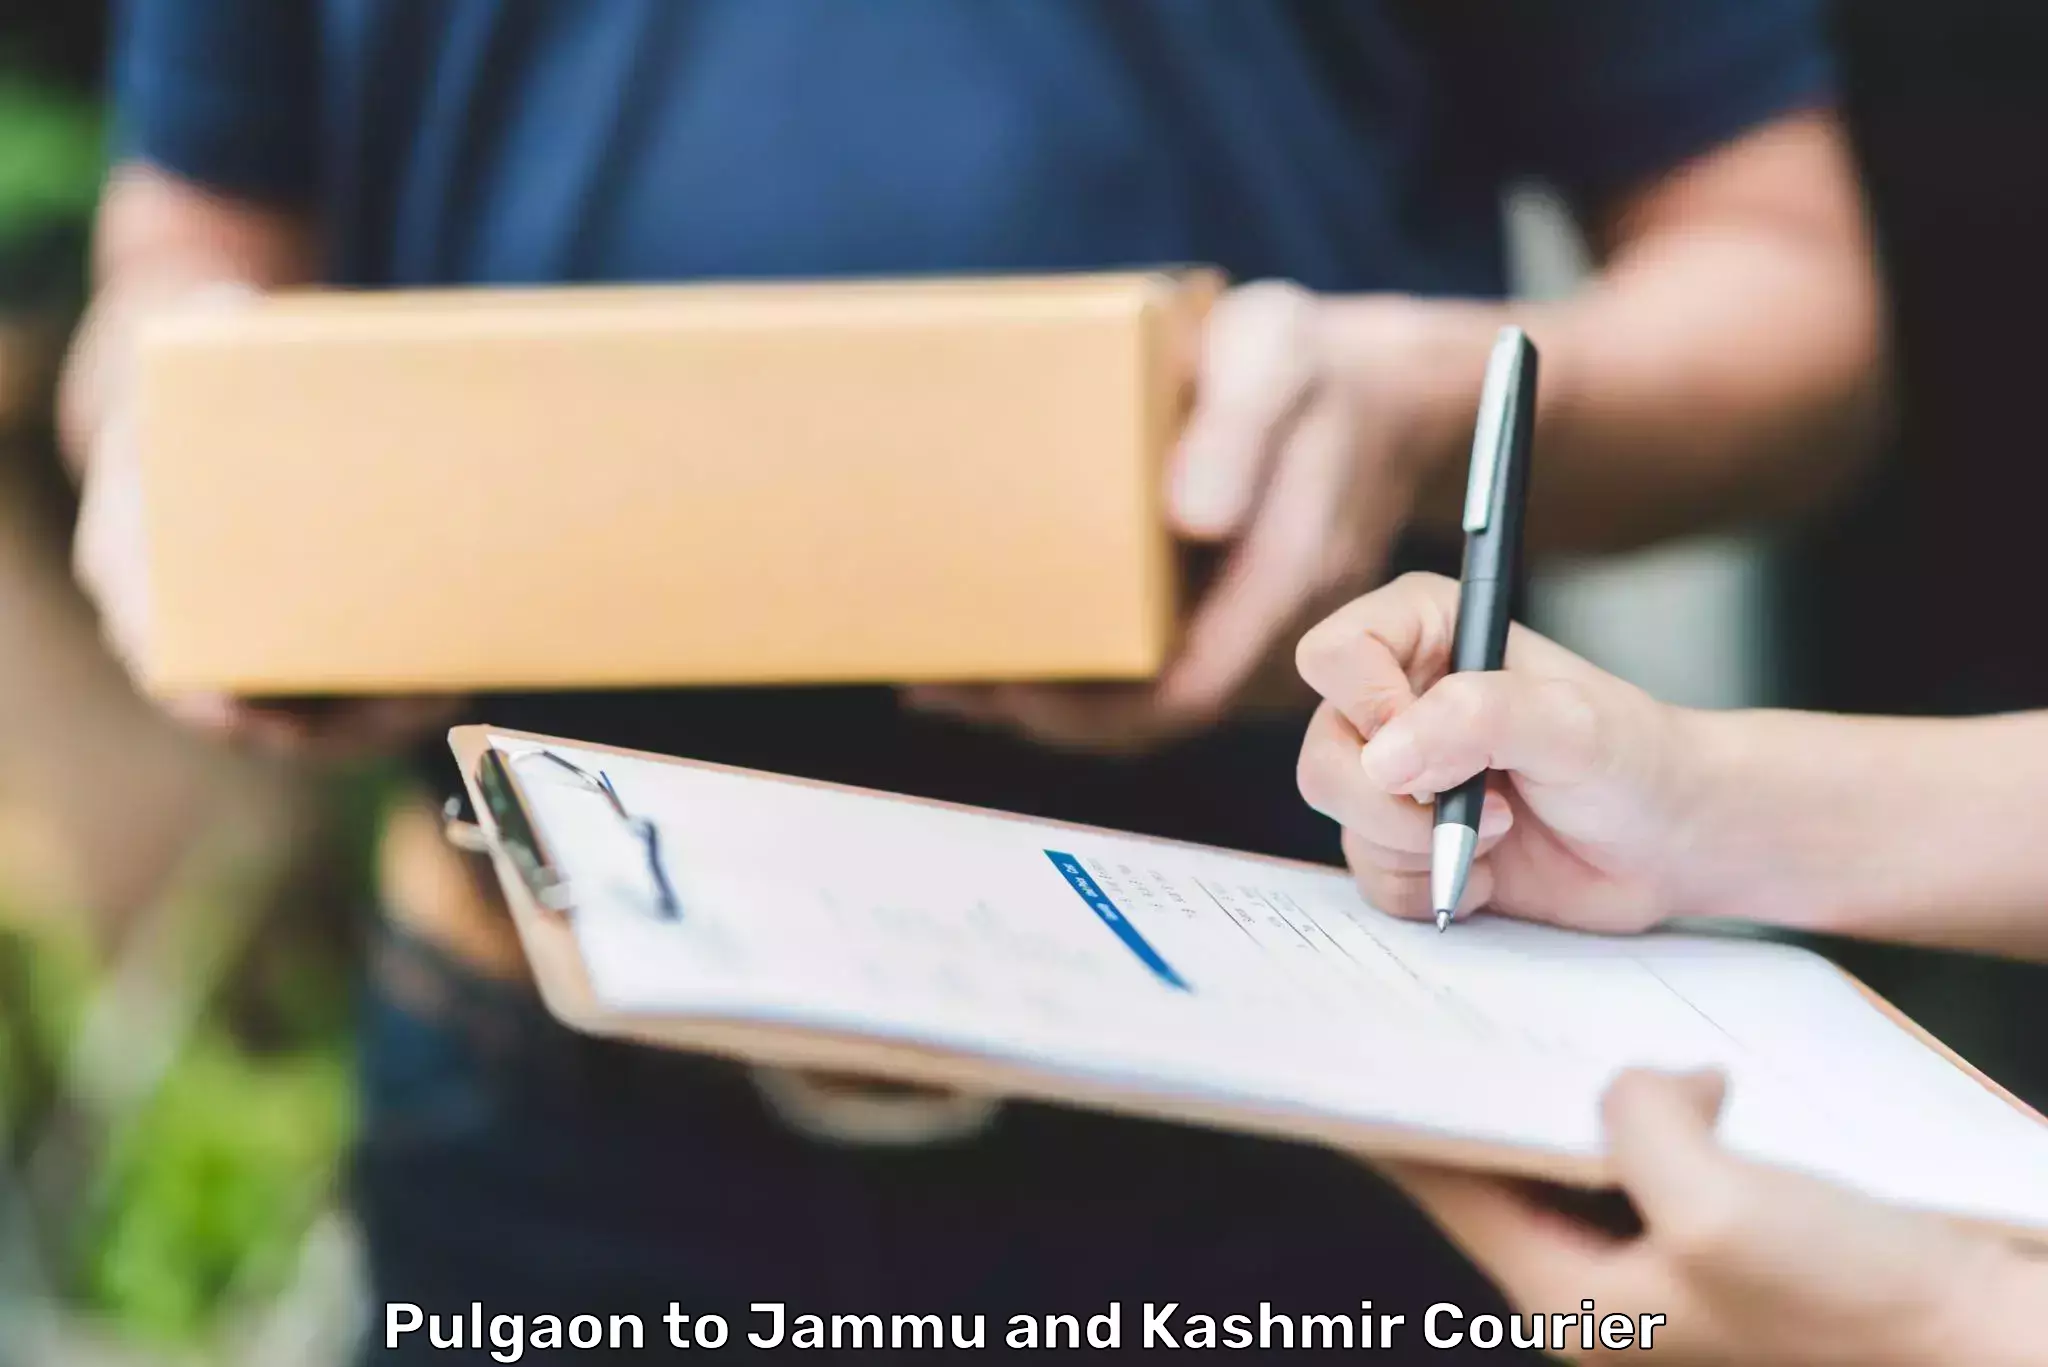 Shipping and handling Pulgaon to Srinagar Kashmir